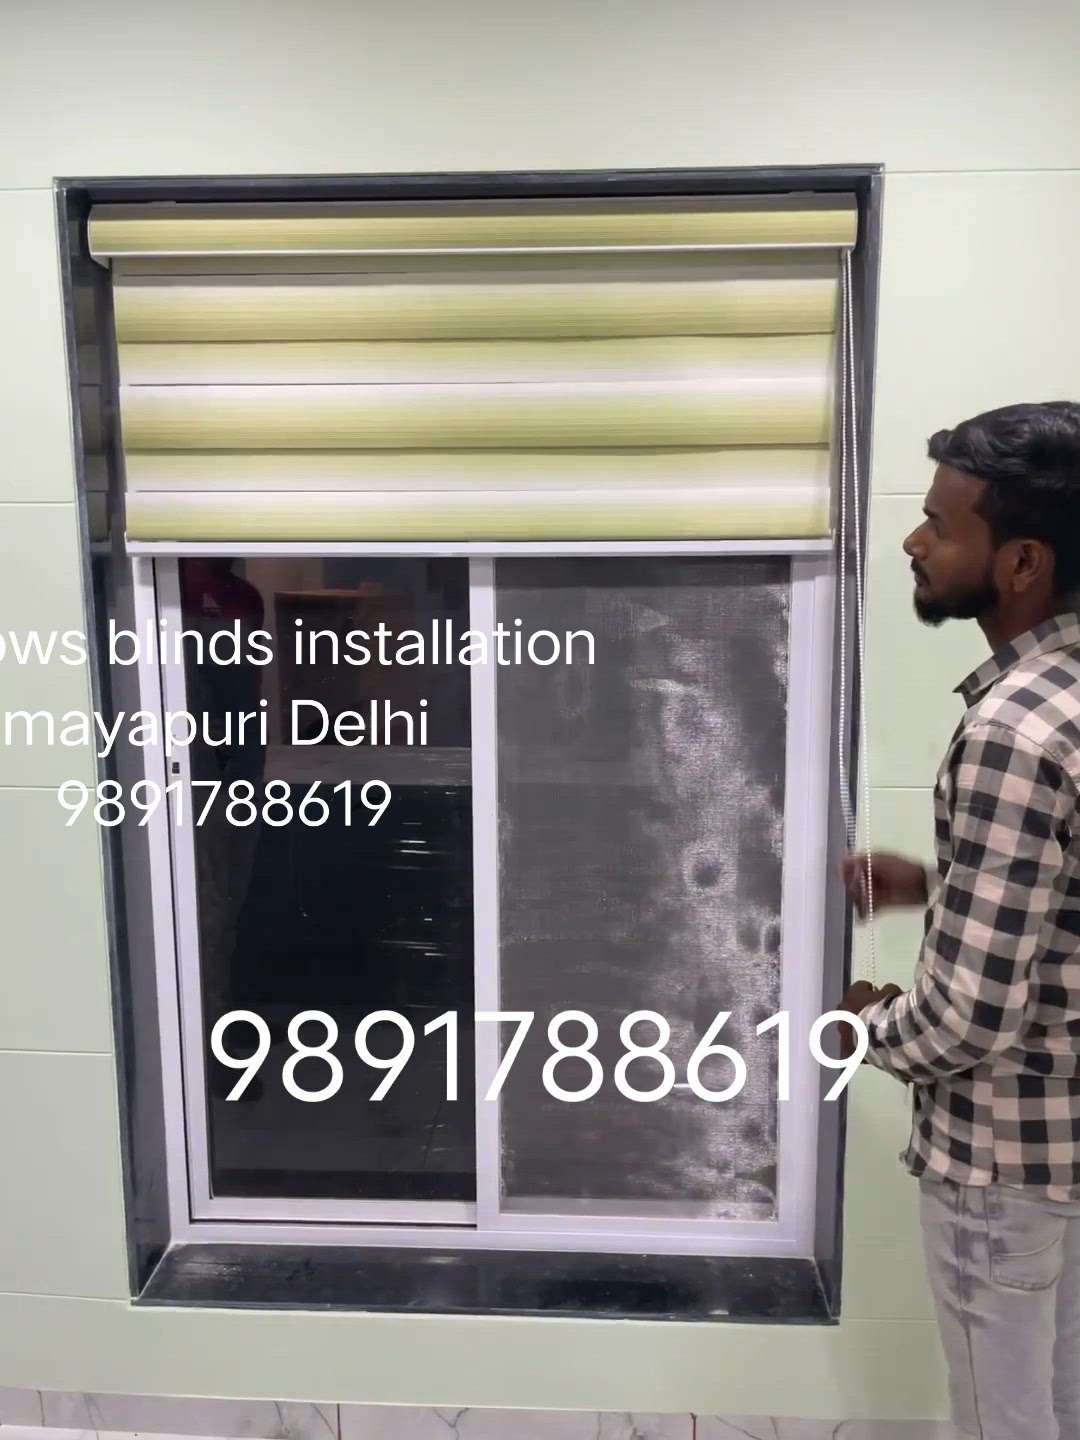 How to install #zebra #roller #blinds for windows installation mayapuri Delhi